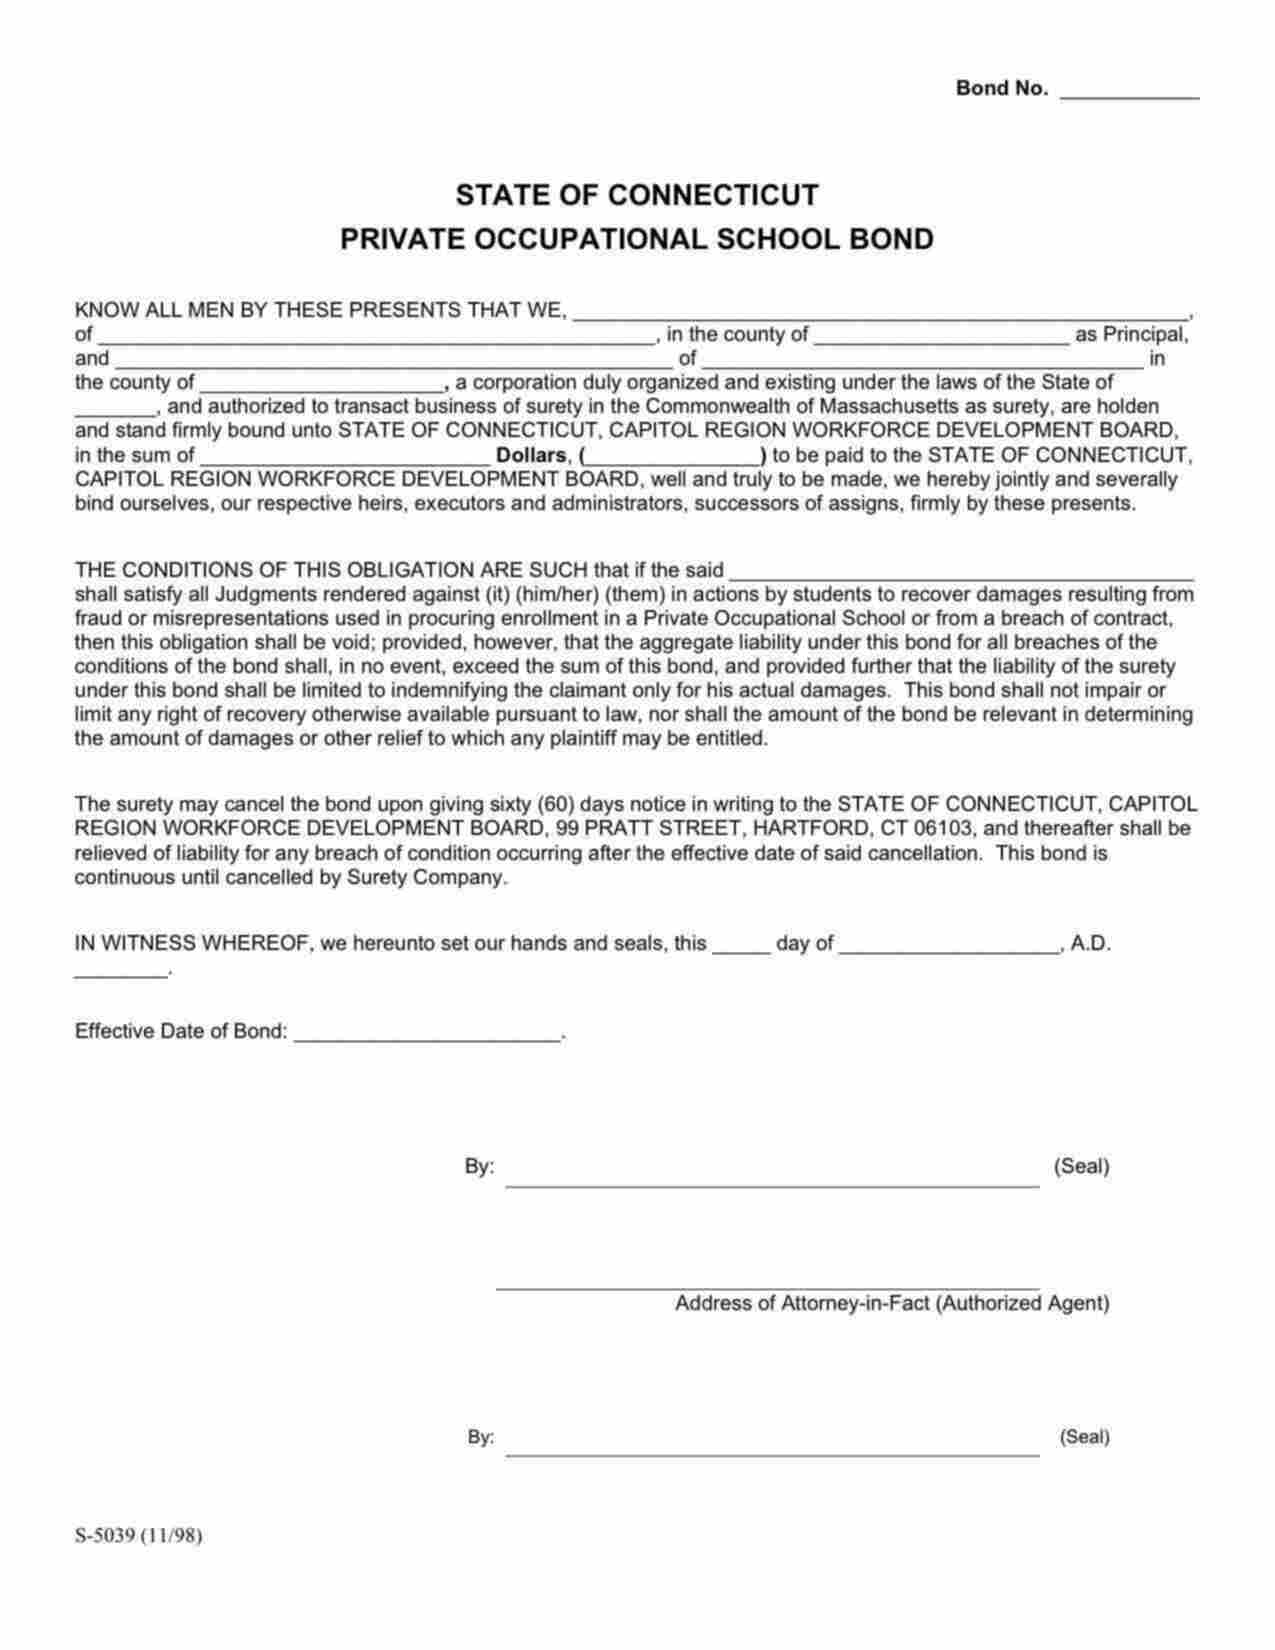 Connecticut Private Occupational School Bond Form